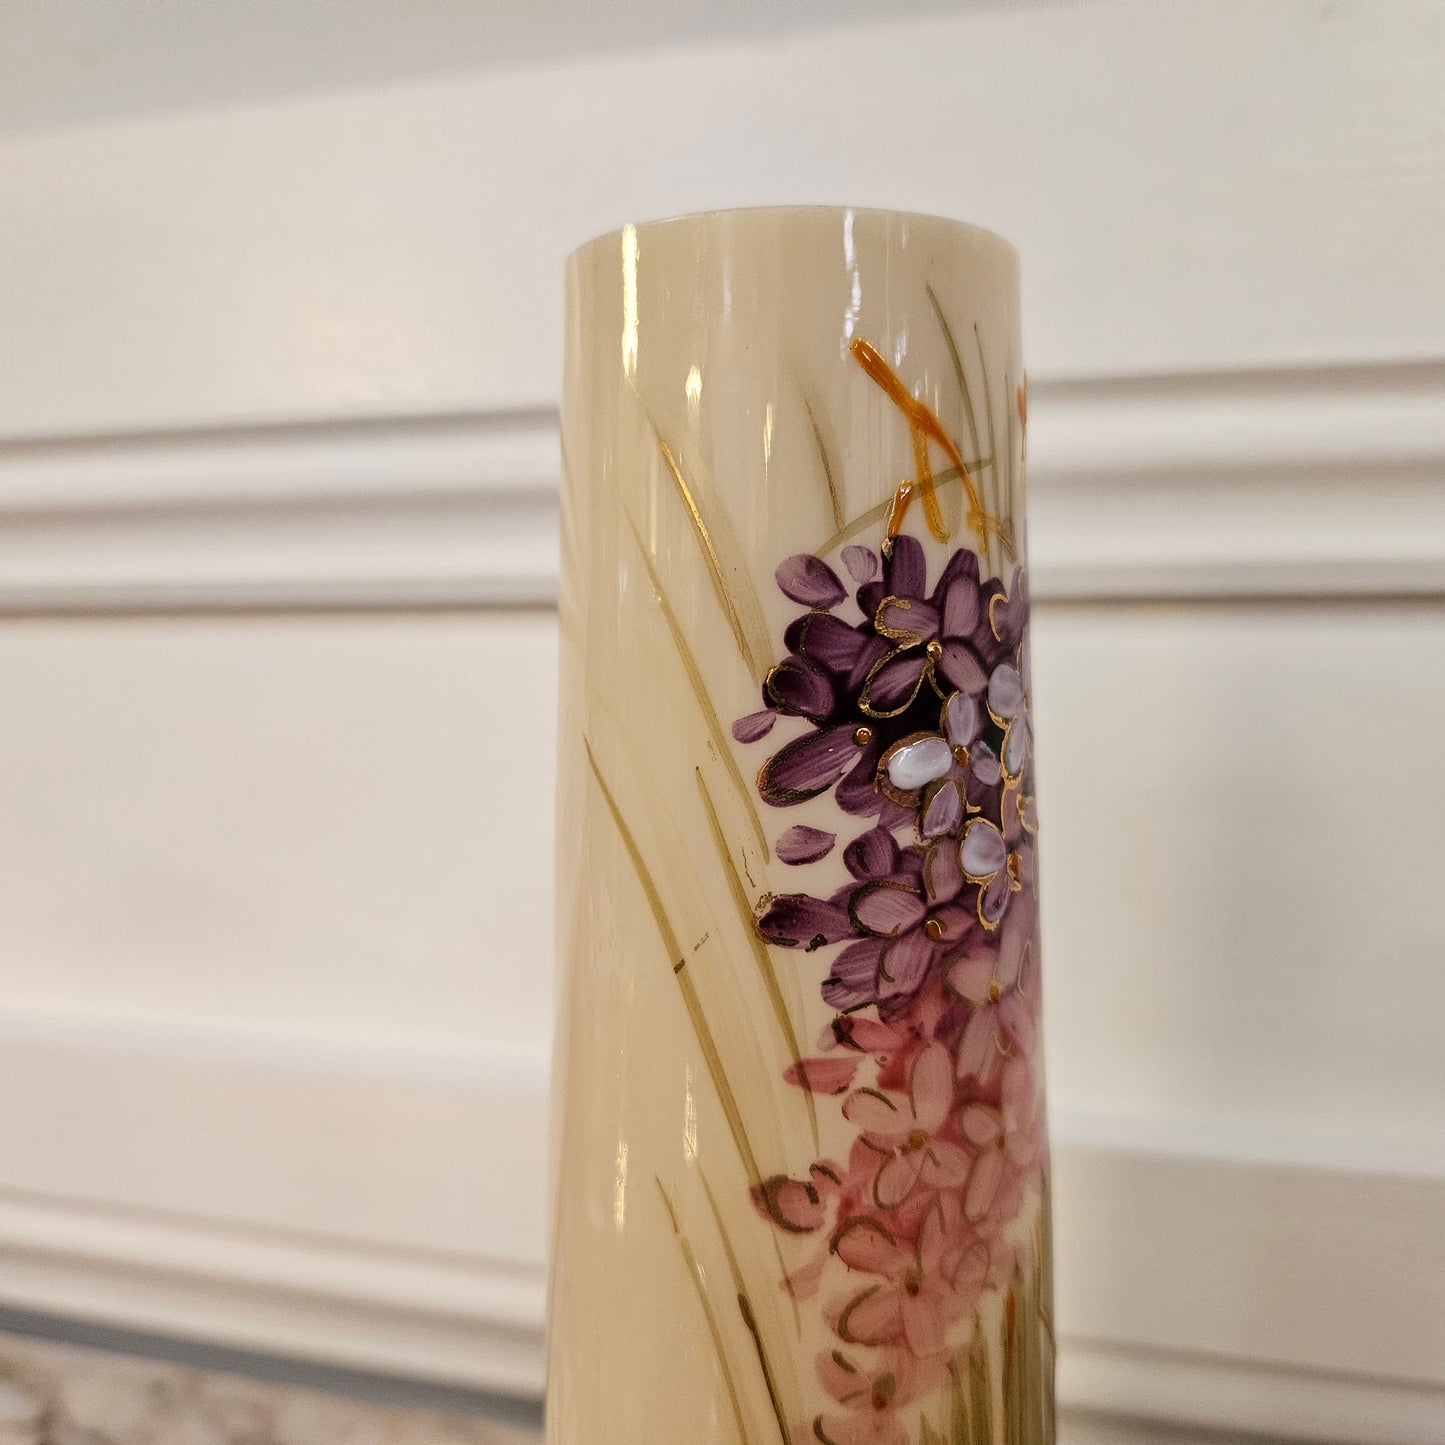 Antique Hand Painted Enameled Vase